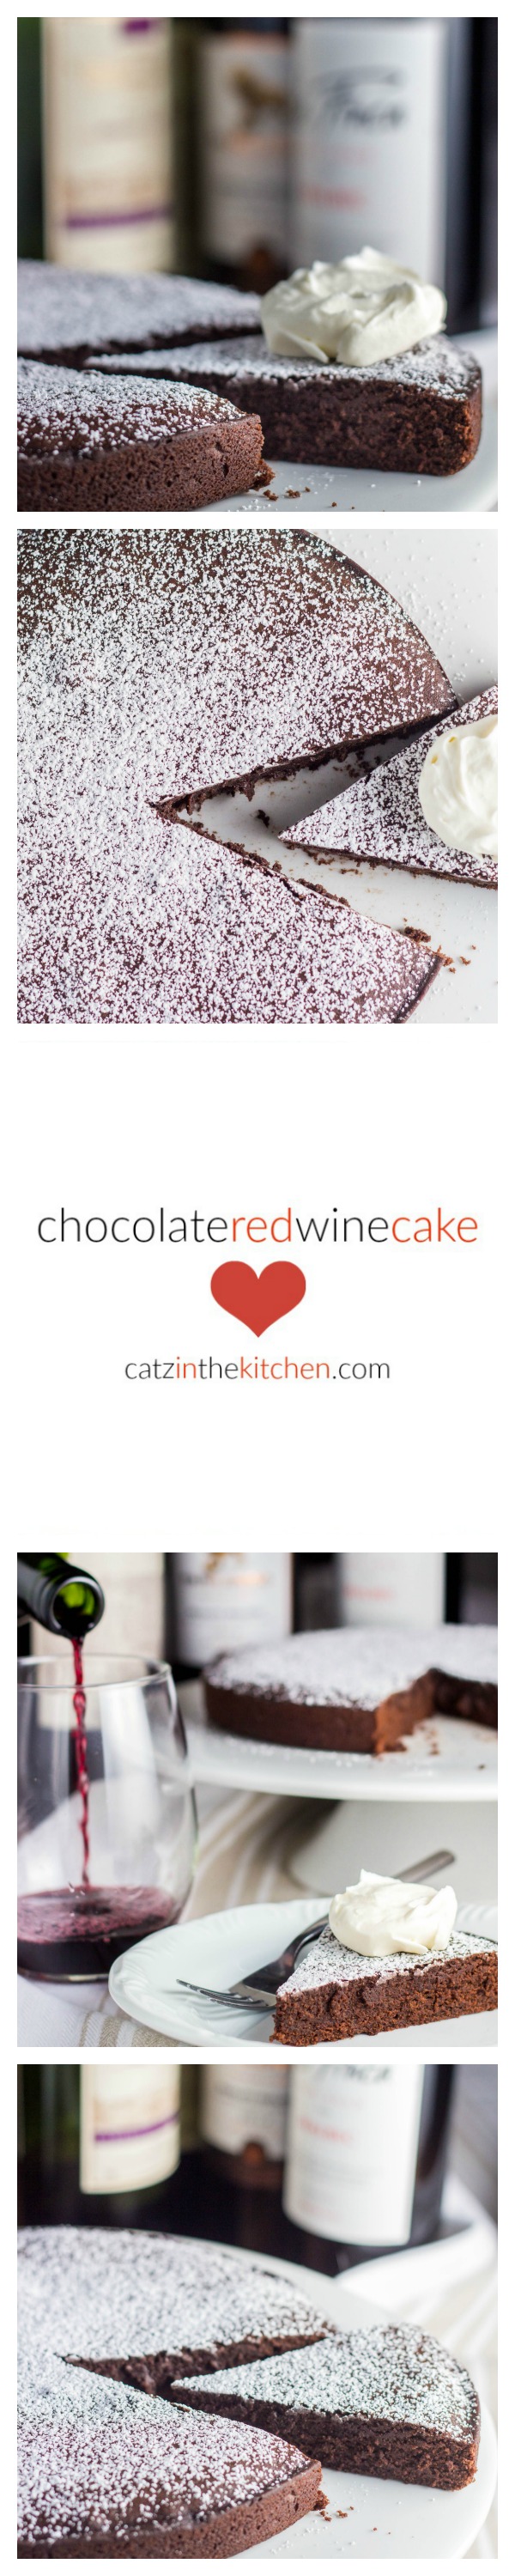 Chocolate Red Wine Cake | Catz in the Kitchen | catzinthekitchen.com | #chocolate #wine #ValentinesDay #dessert #cake